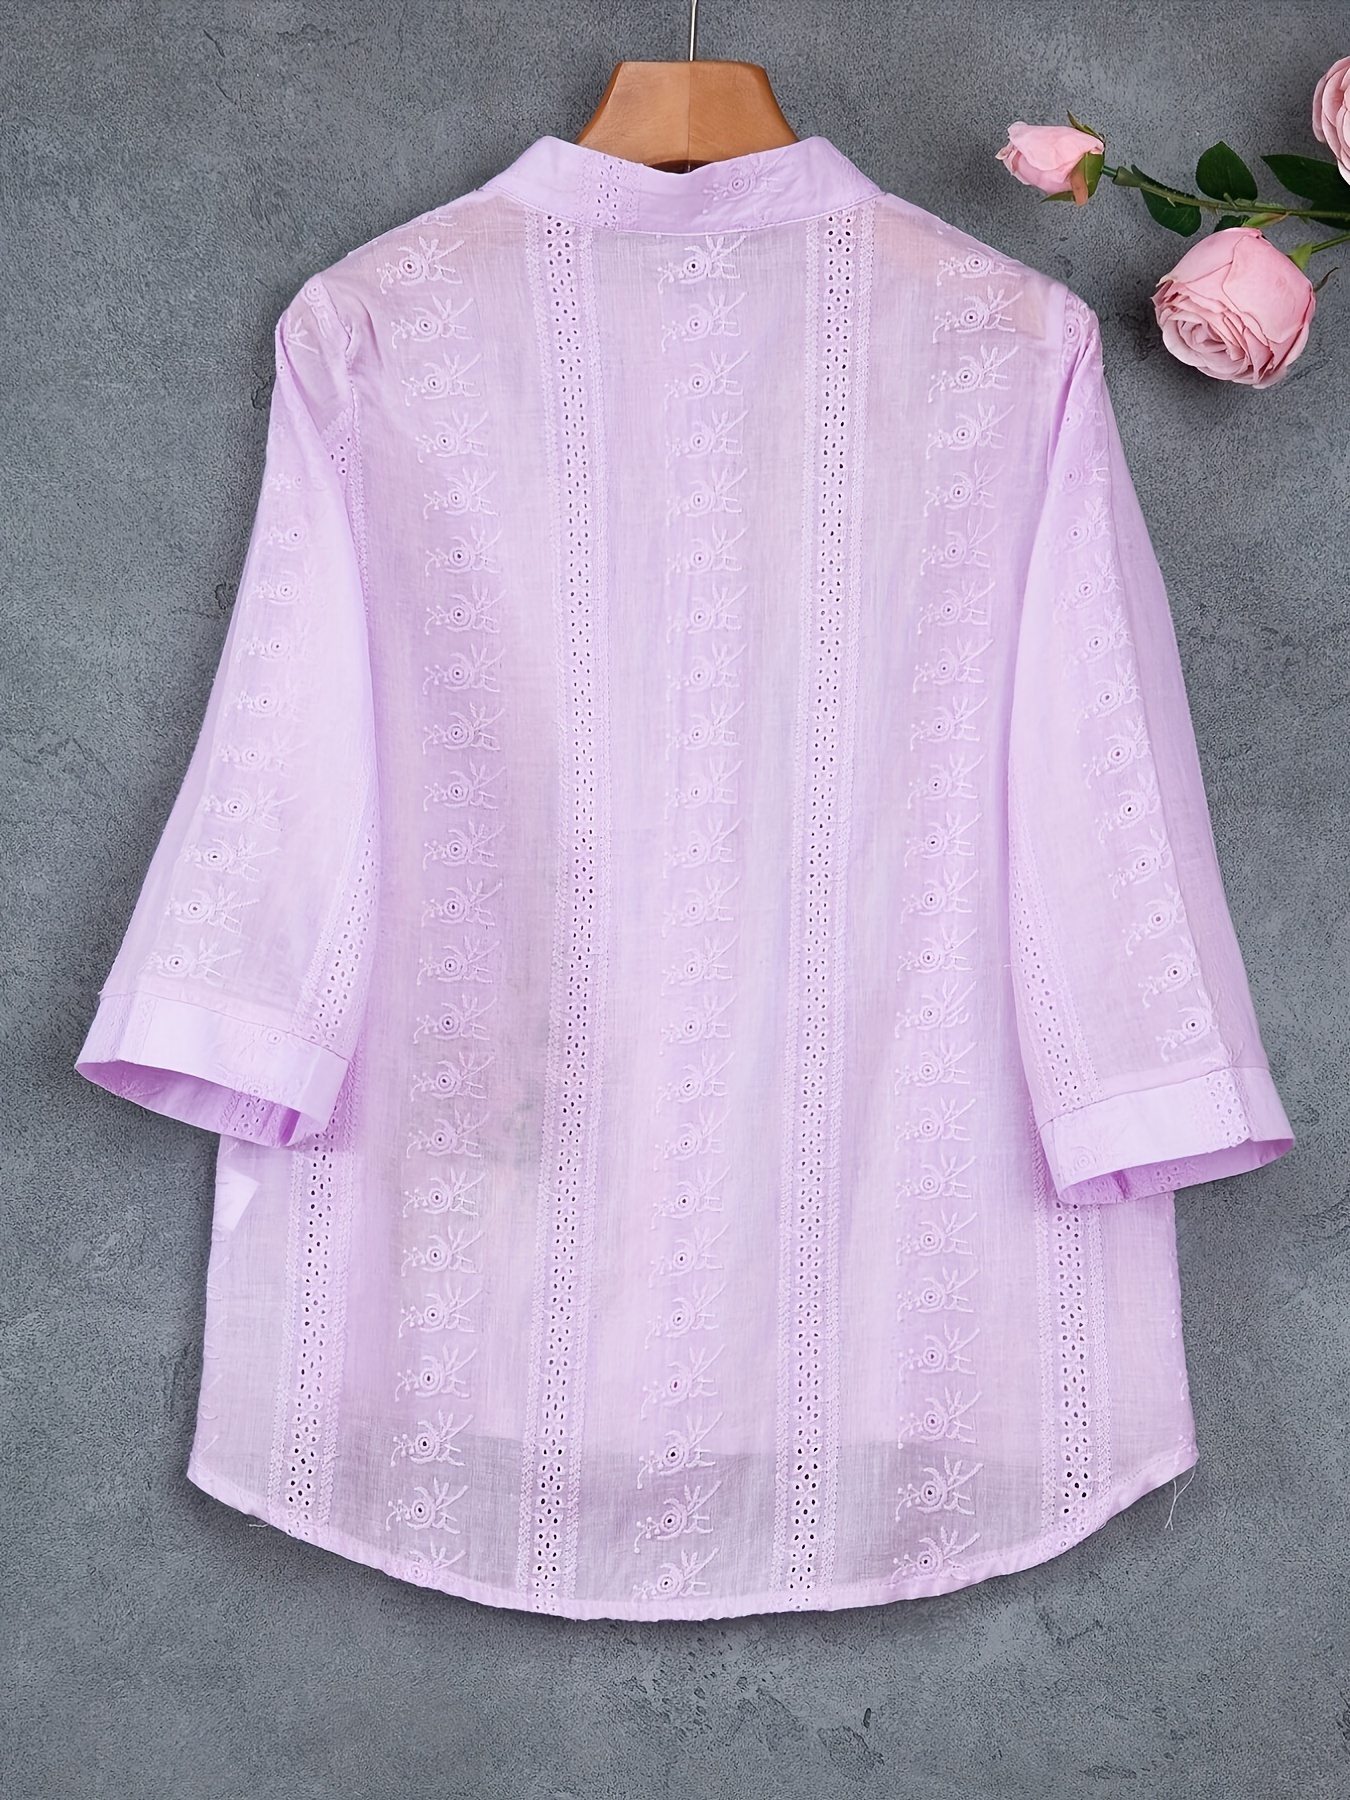 eyelet floral blouse elegant button front blouse for spring summer womens clothing details 1